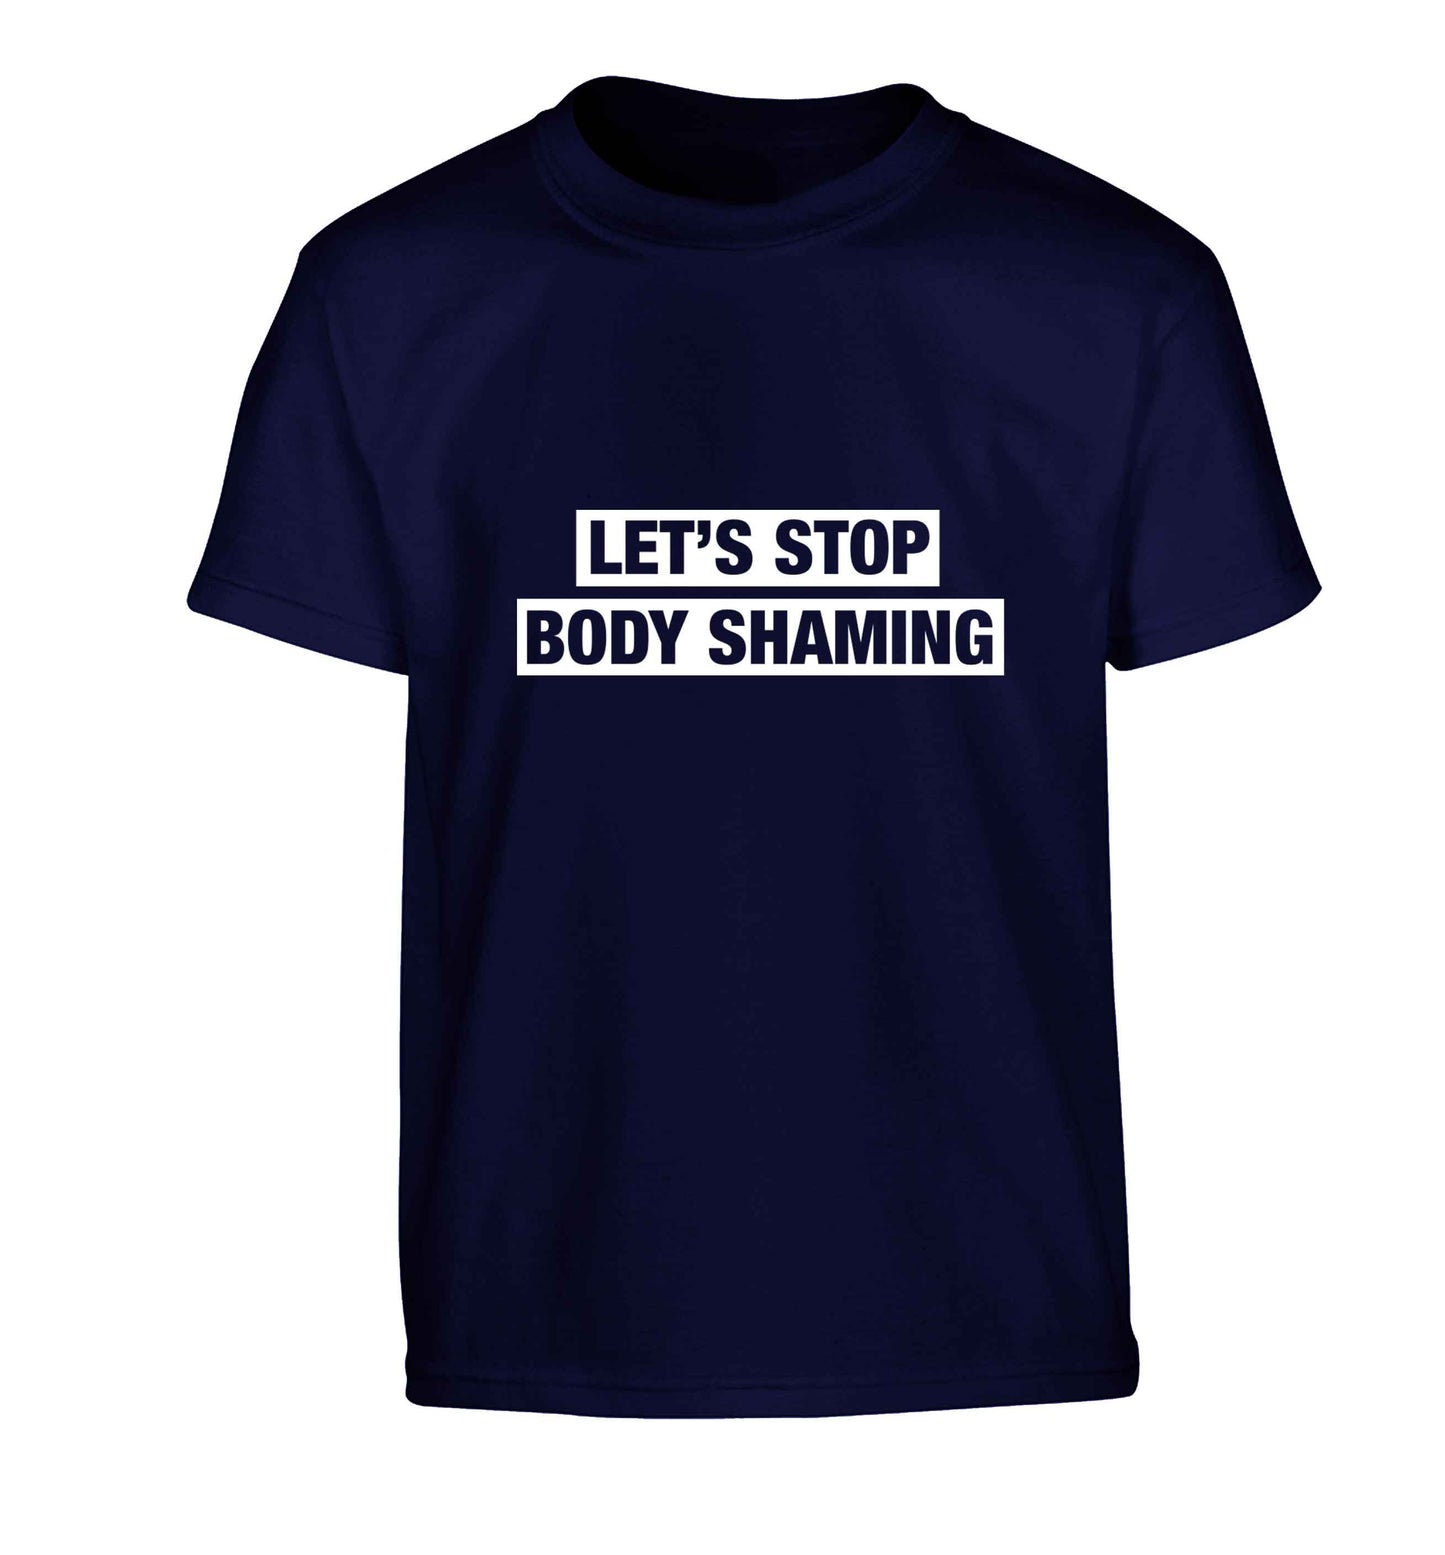 Let's stop body shaming Children's navy Tshirt 12-13 Years